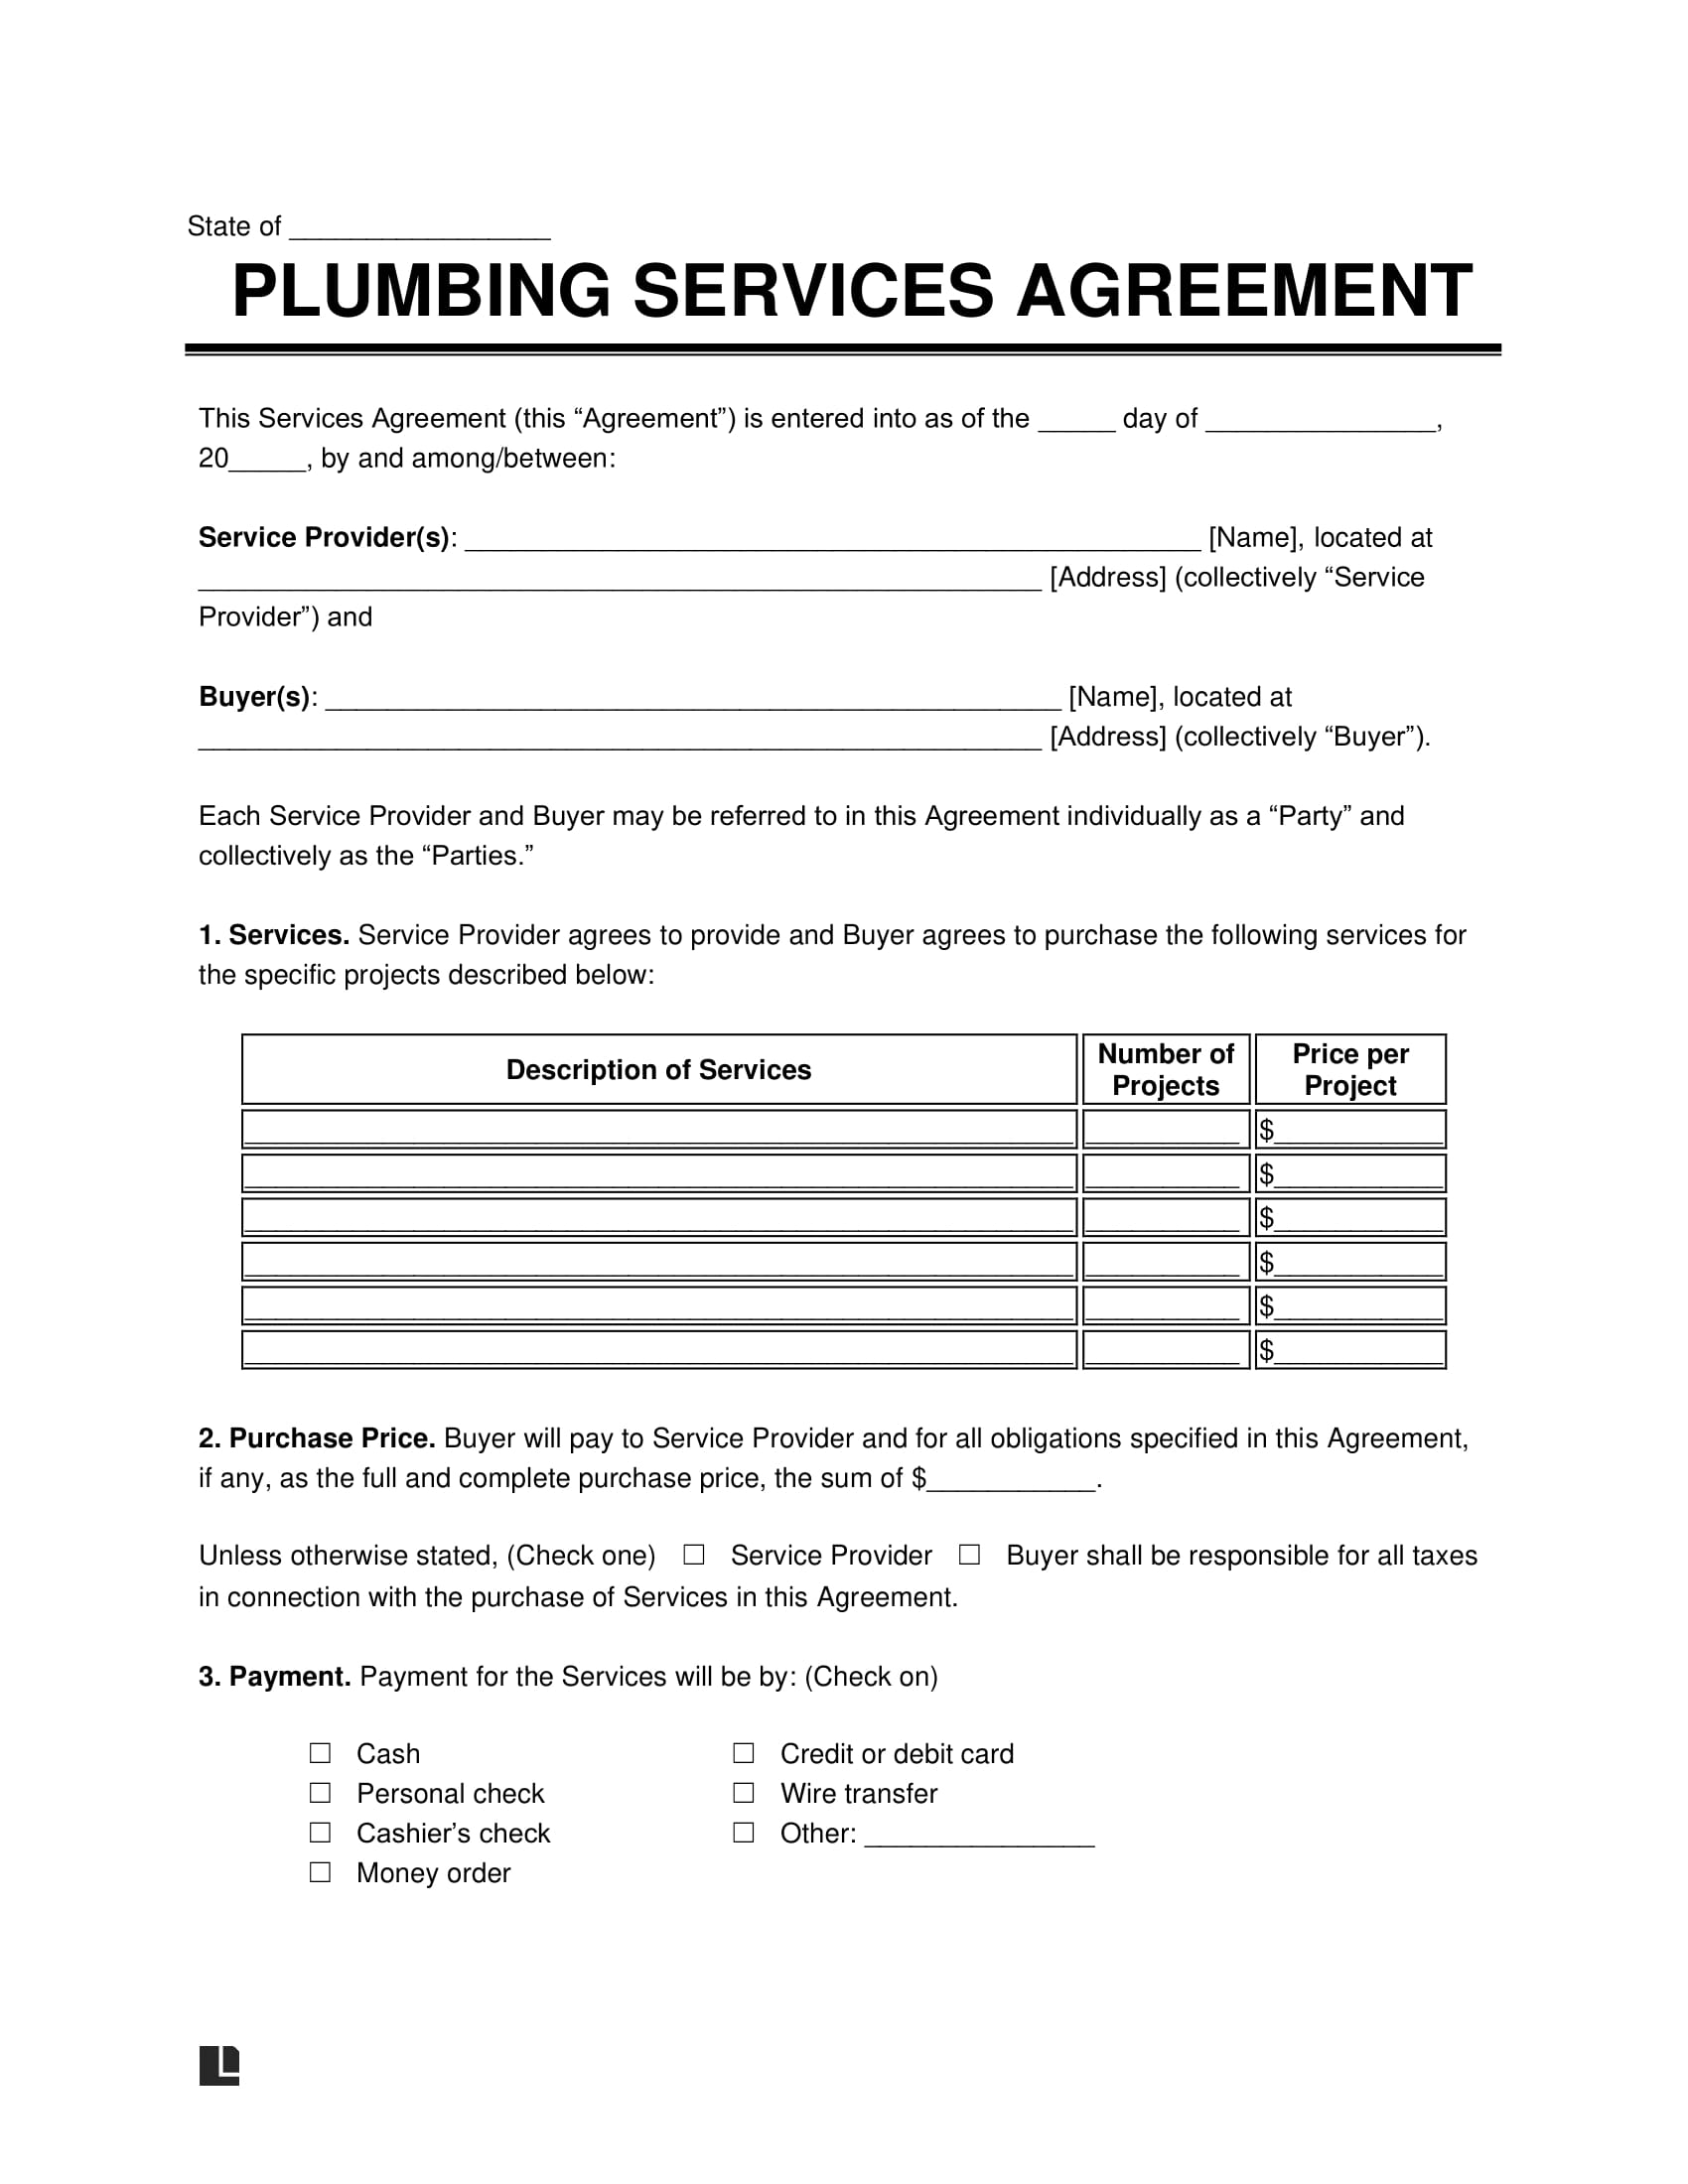 Plumbing contract screenshot